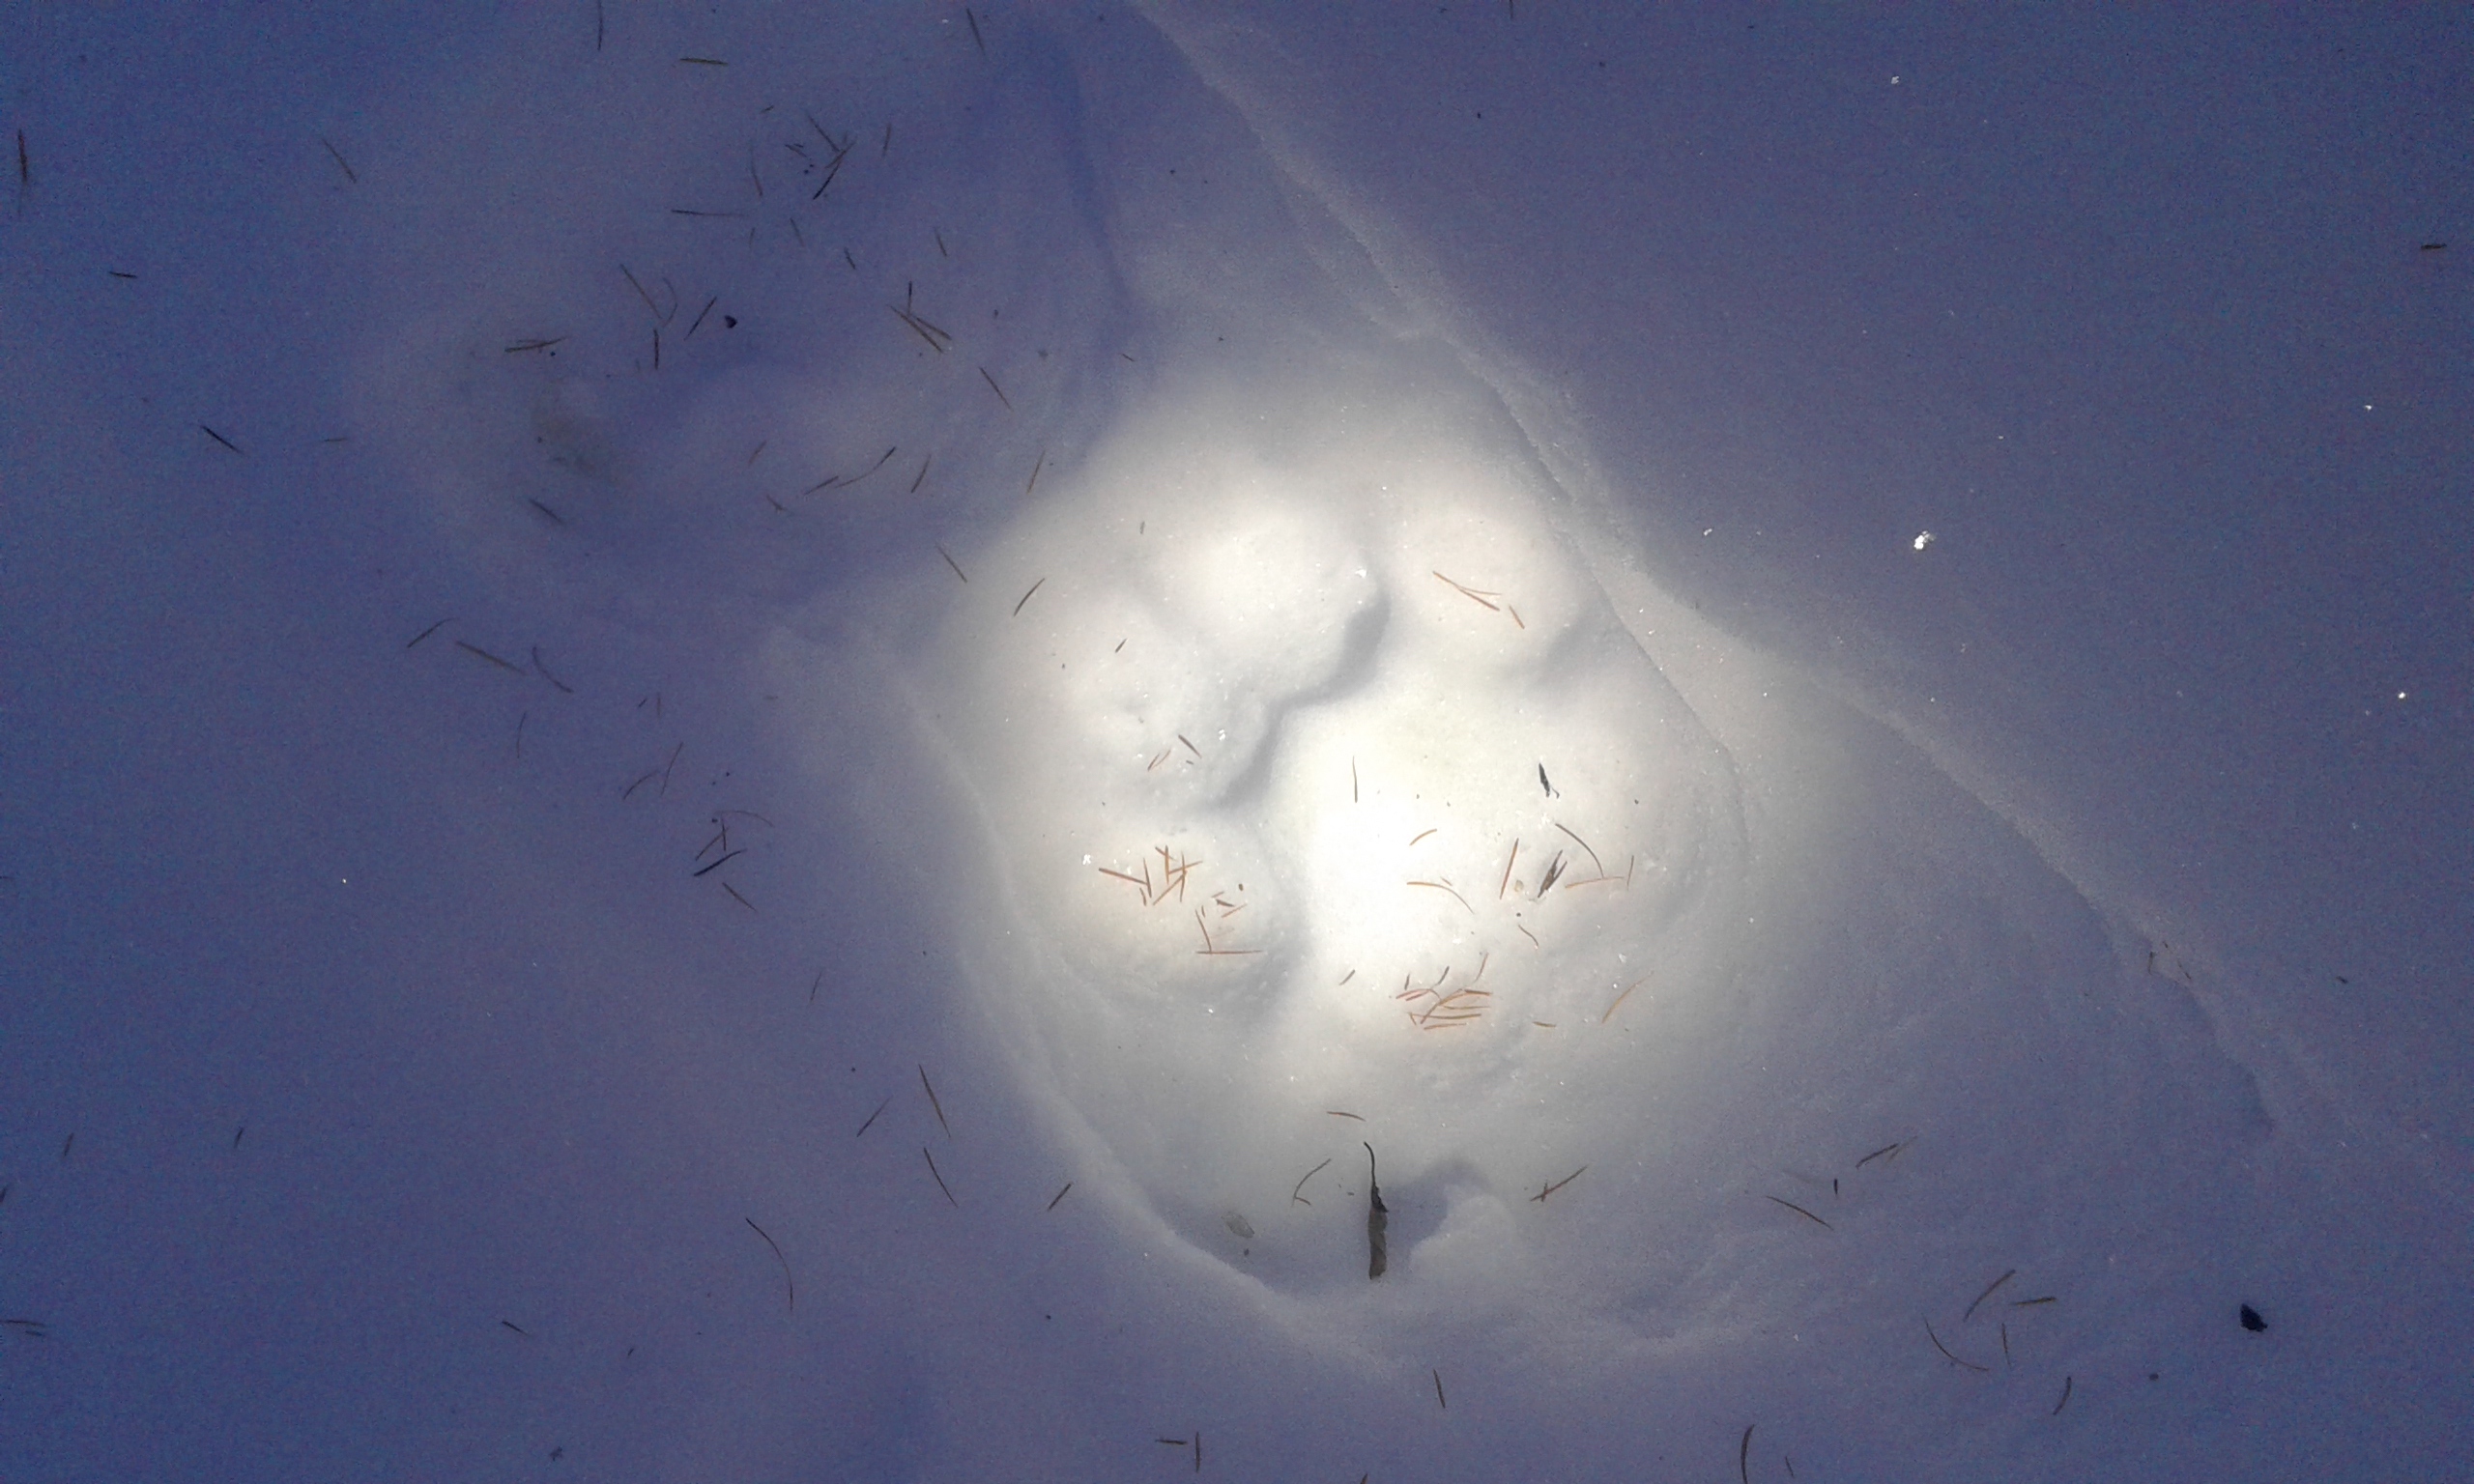 Amur tiger footprints lead North